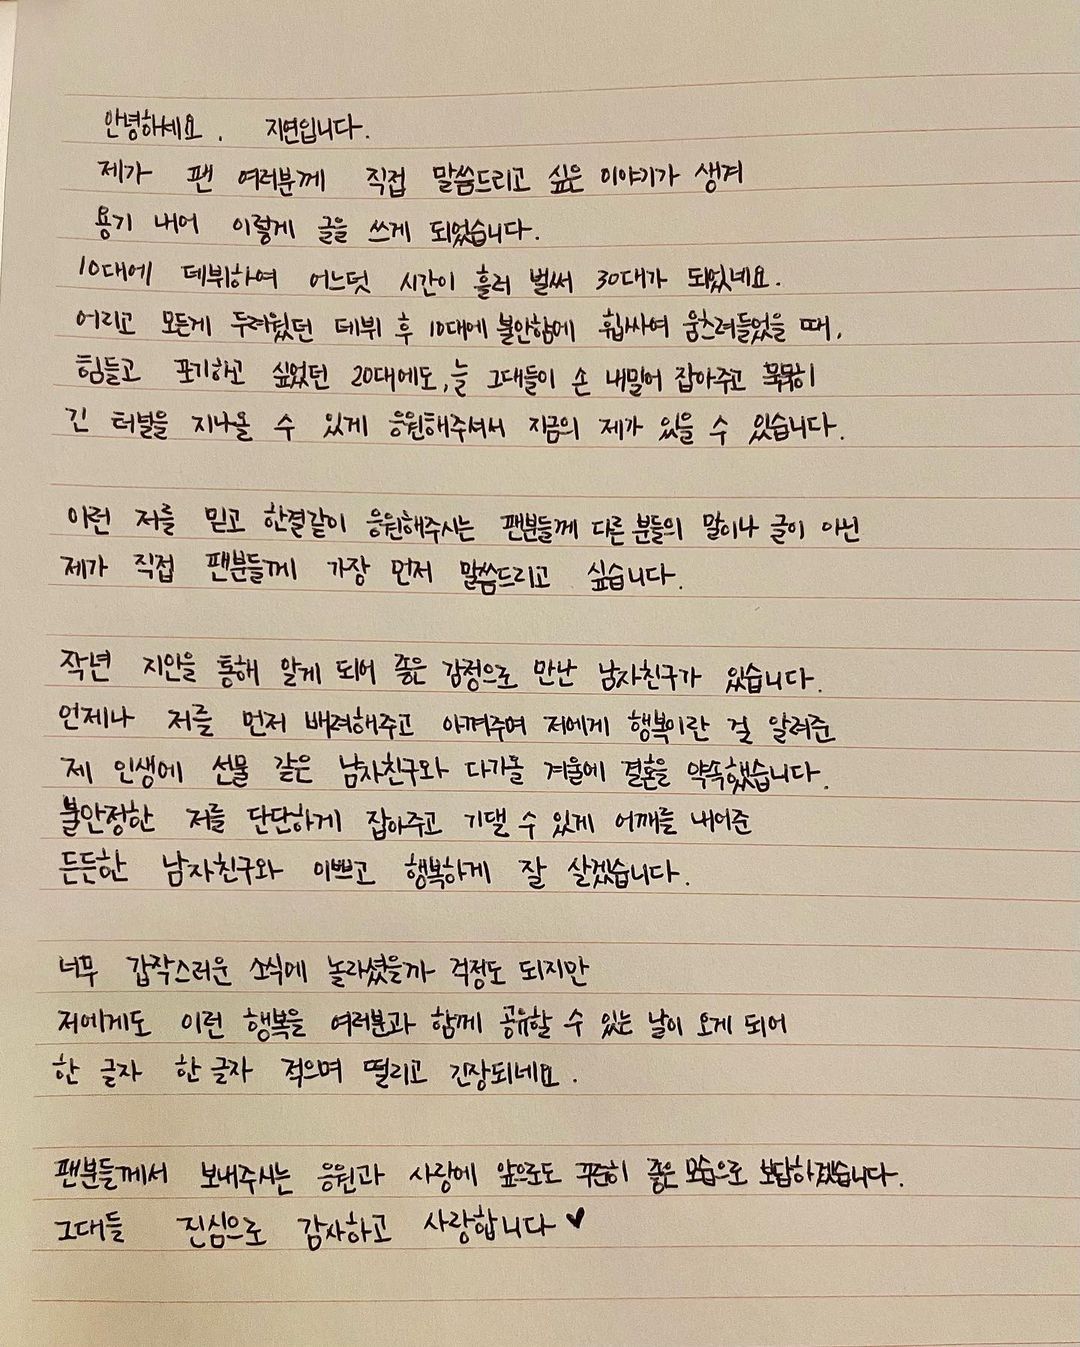 Surat tulis tangan dari Jiyeon untuk fans